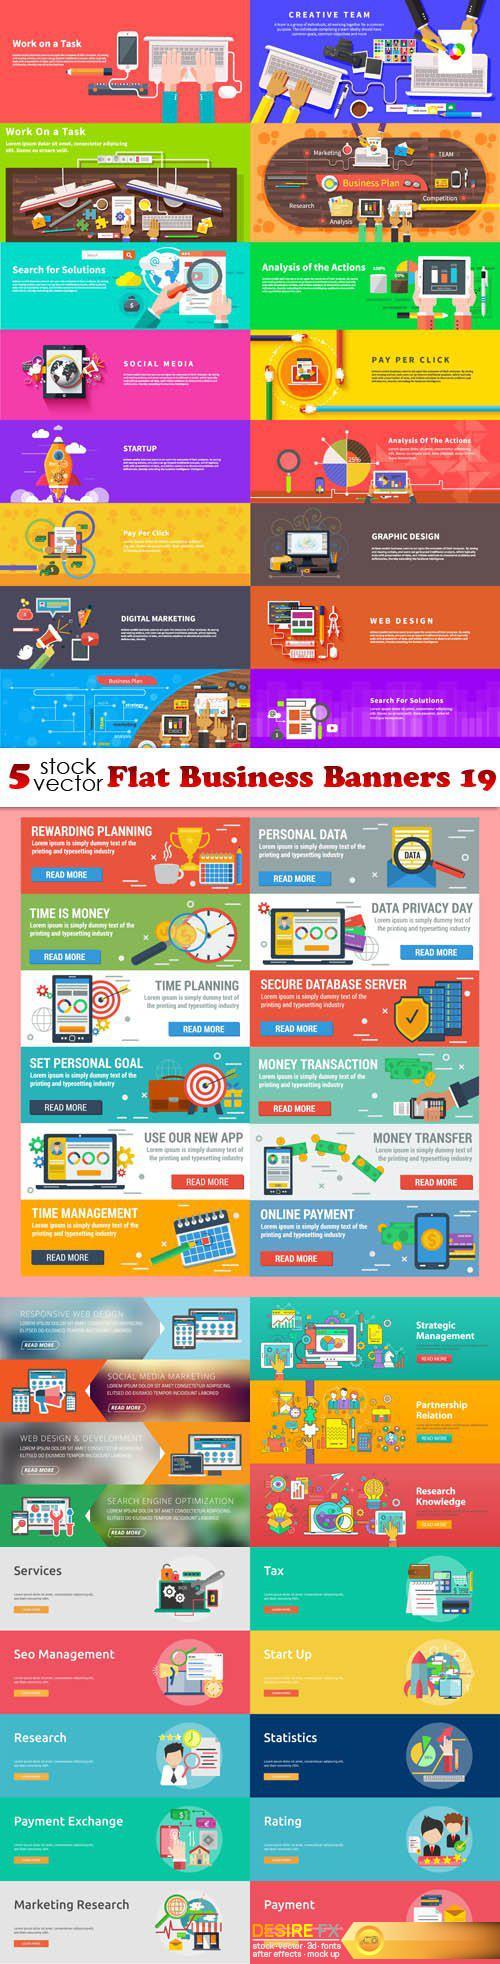 Vectors - Flat Business Banners 19